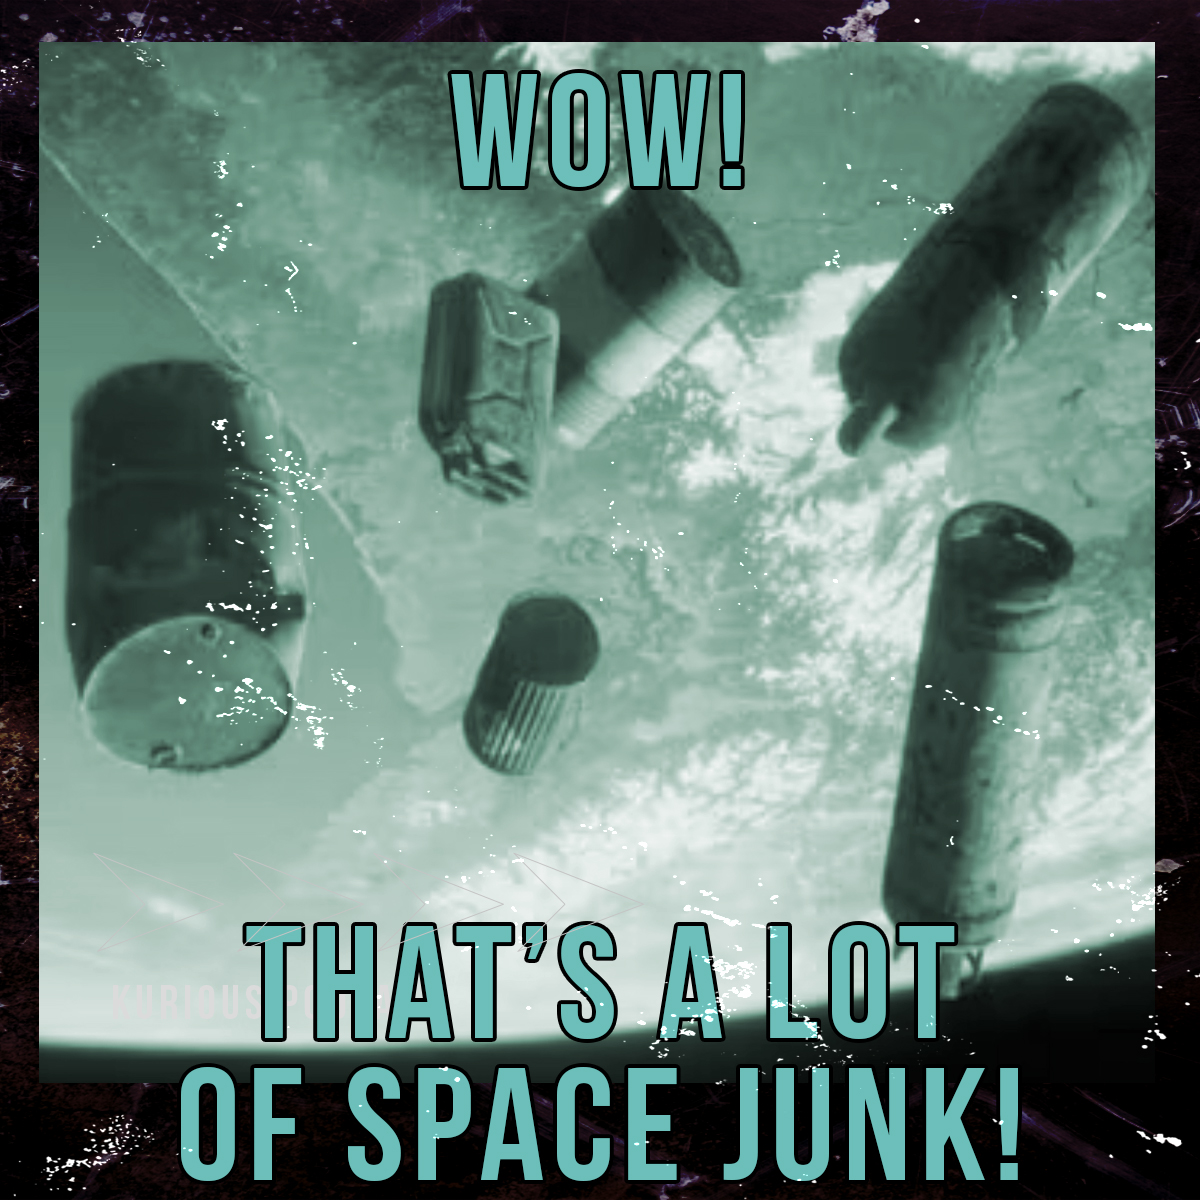 2 space junk